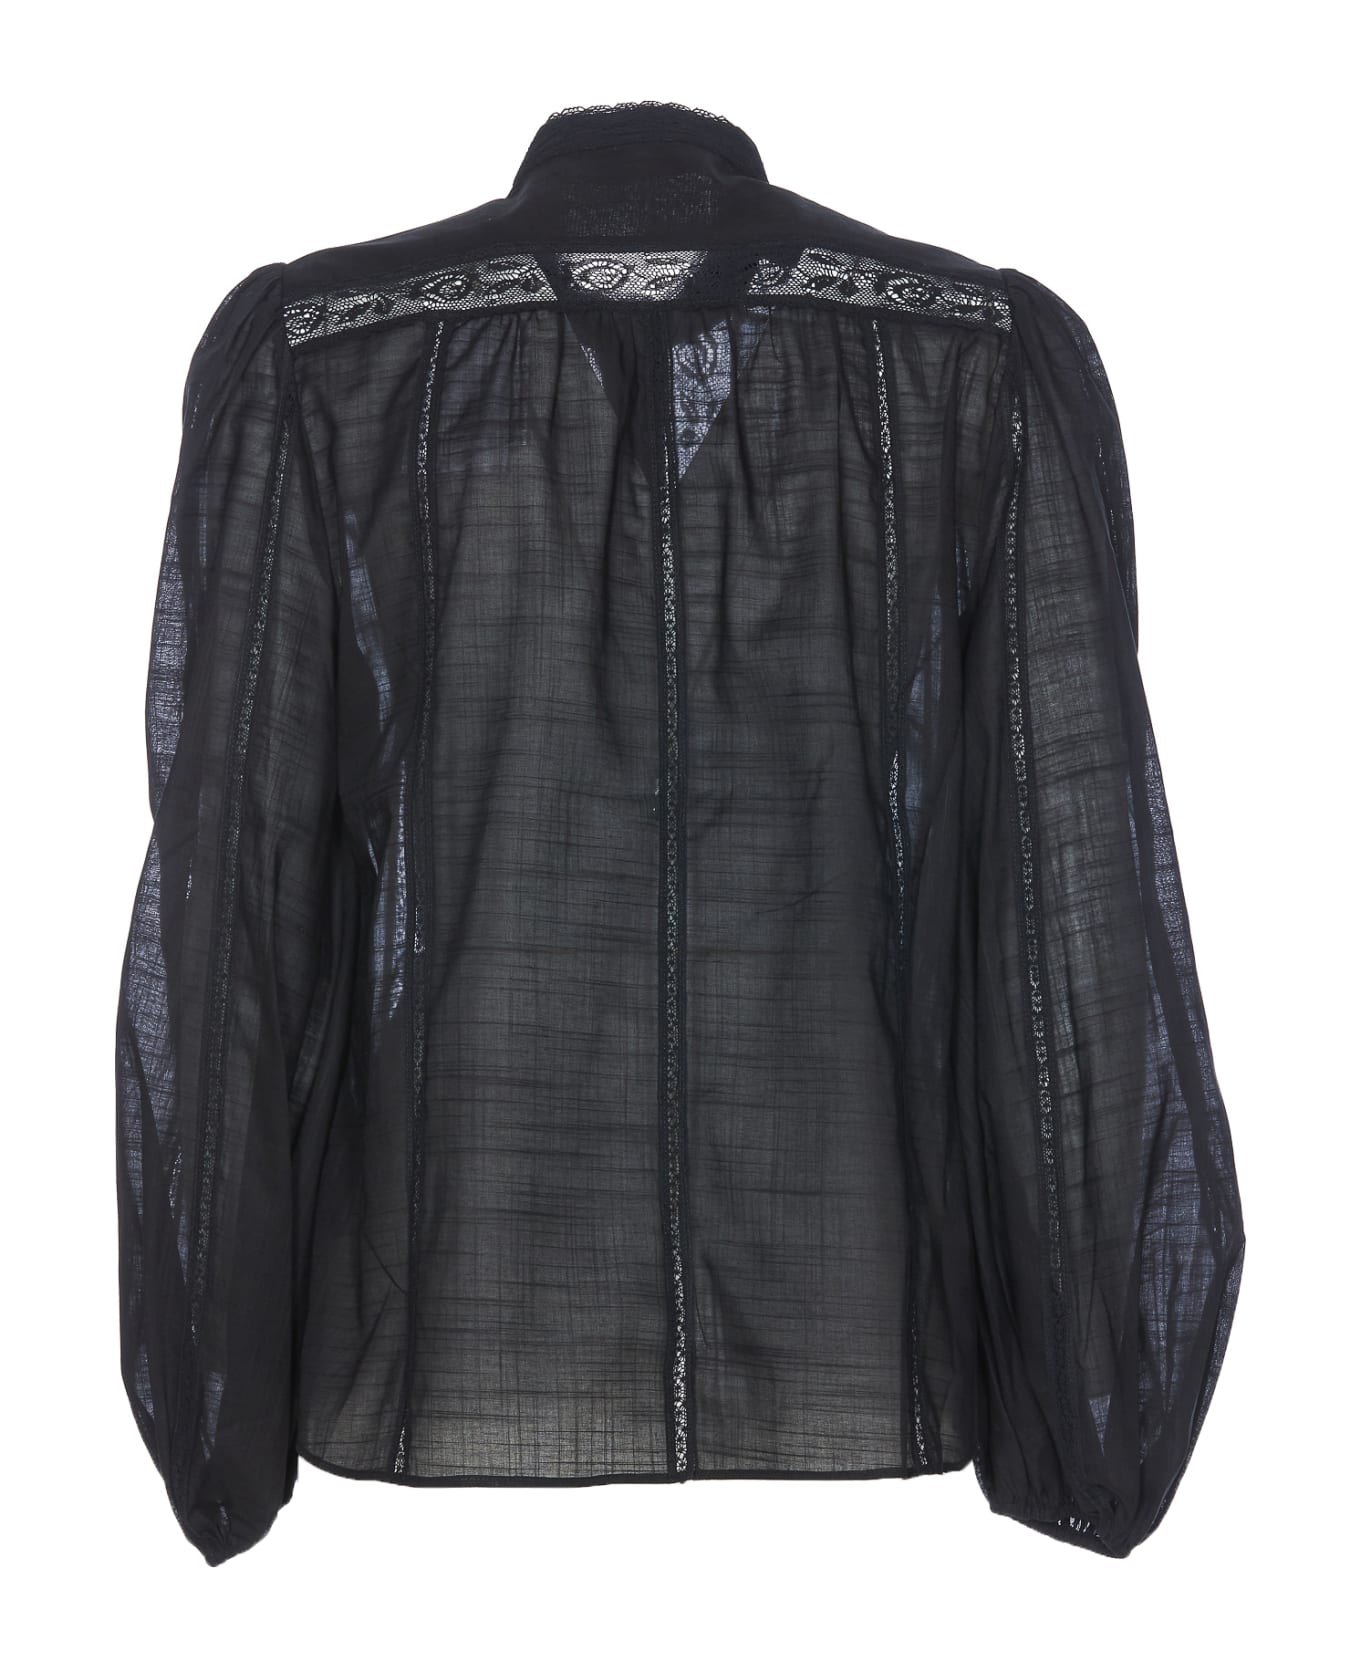 Zimmermann Halliday Lace Trim Shirt - Black